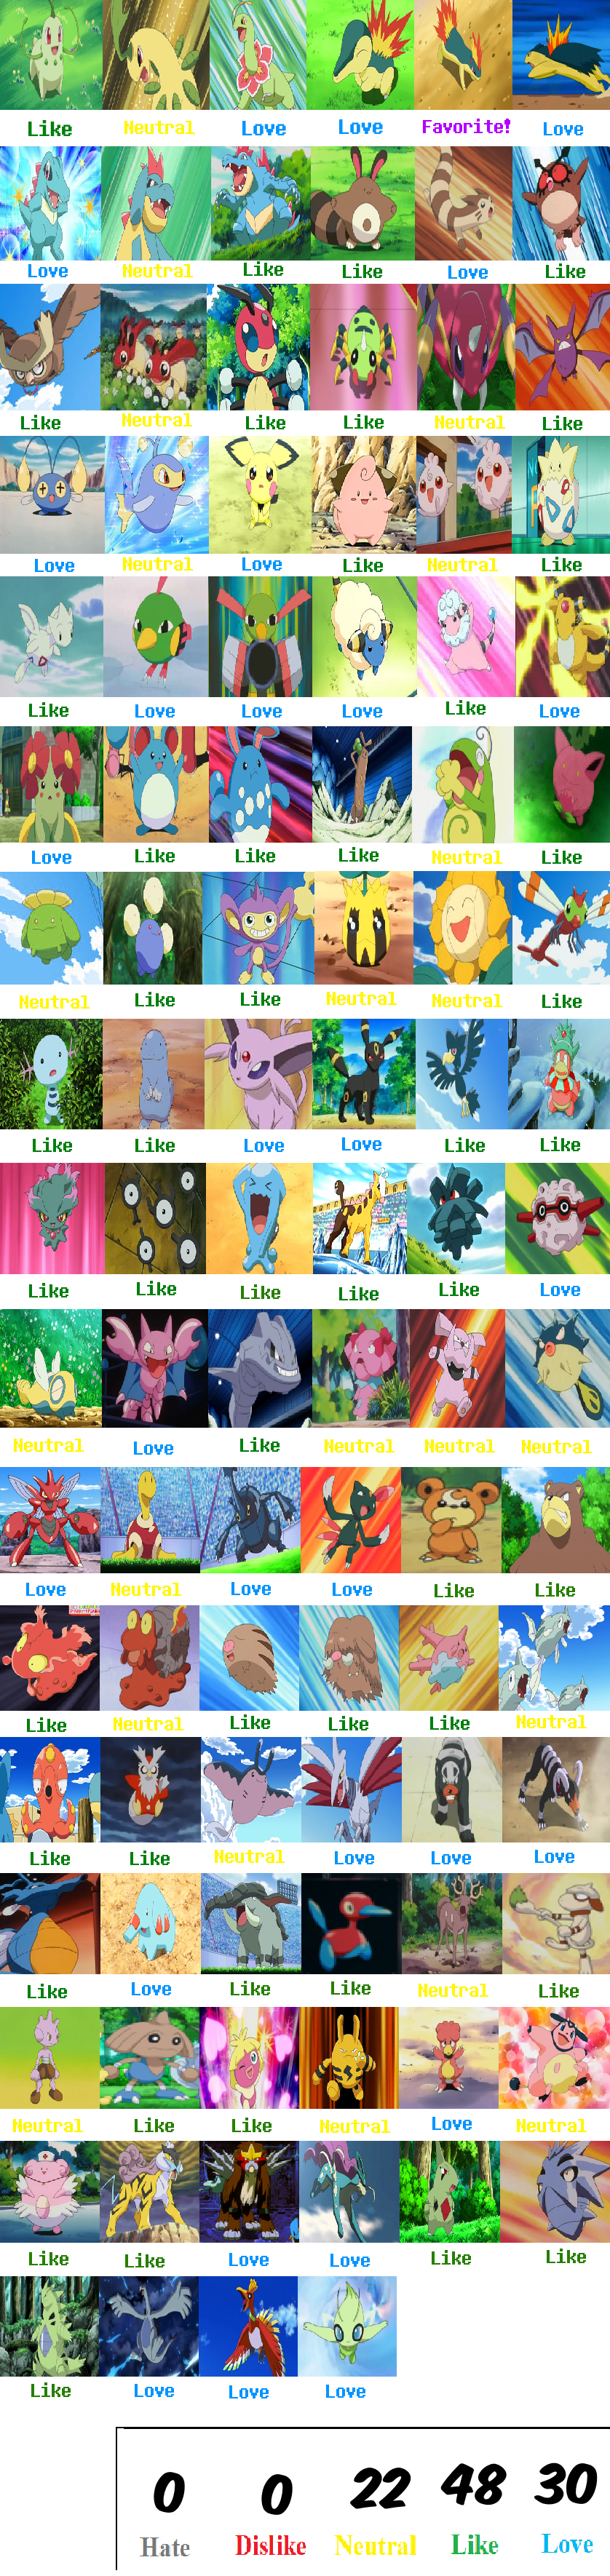 Pokemon Gen 2 - Generation 2 Chart - Pokemon post - Imgur